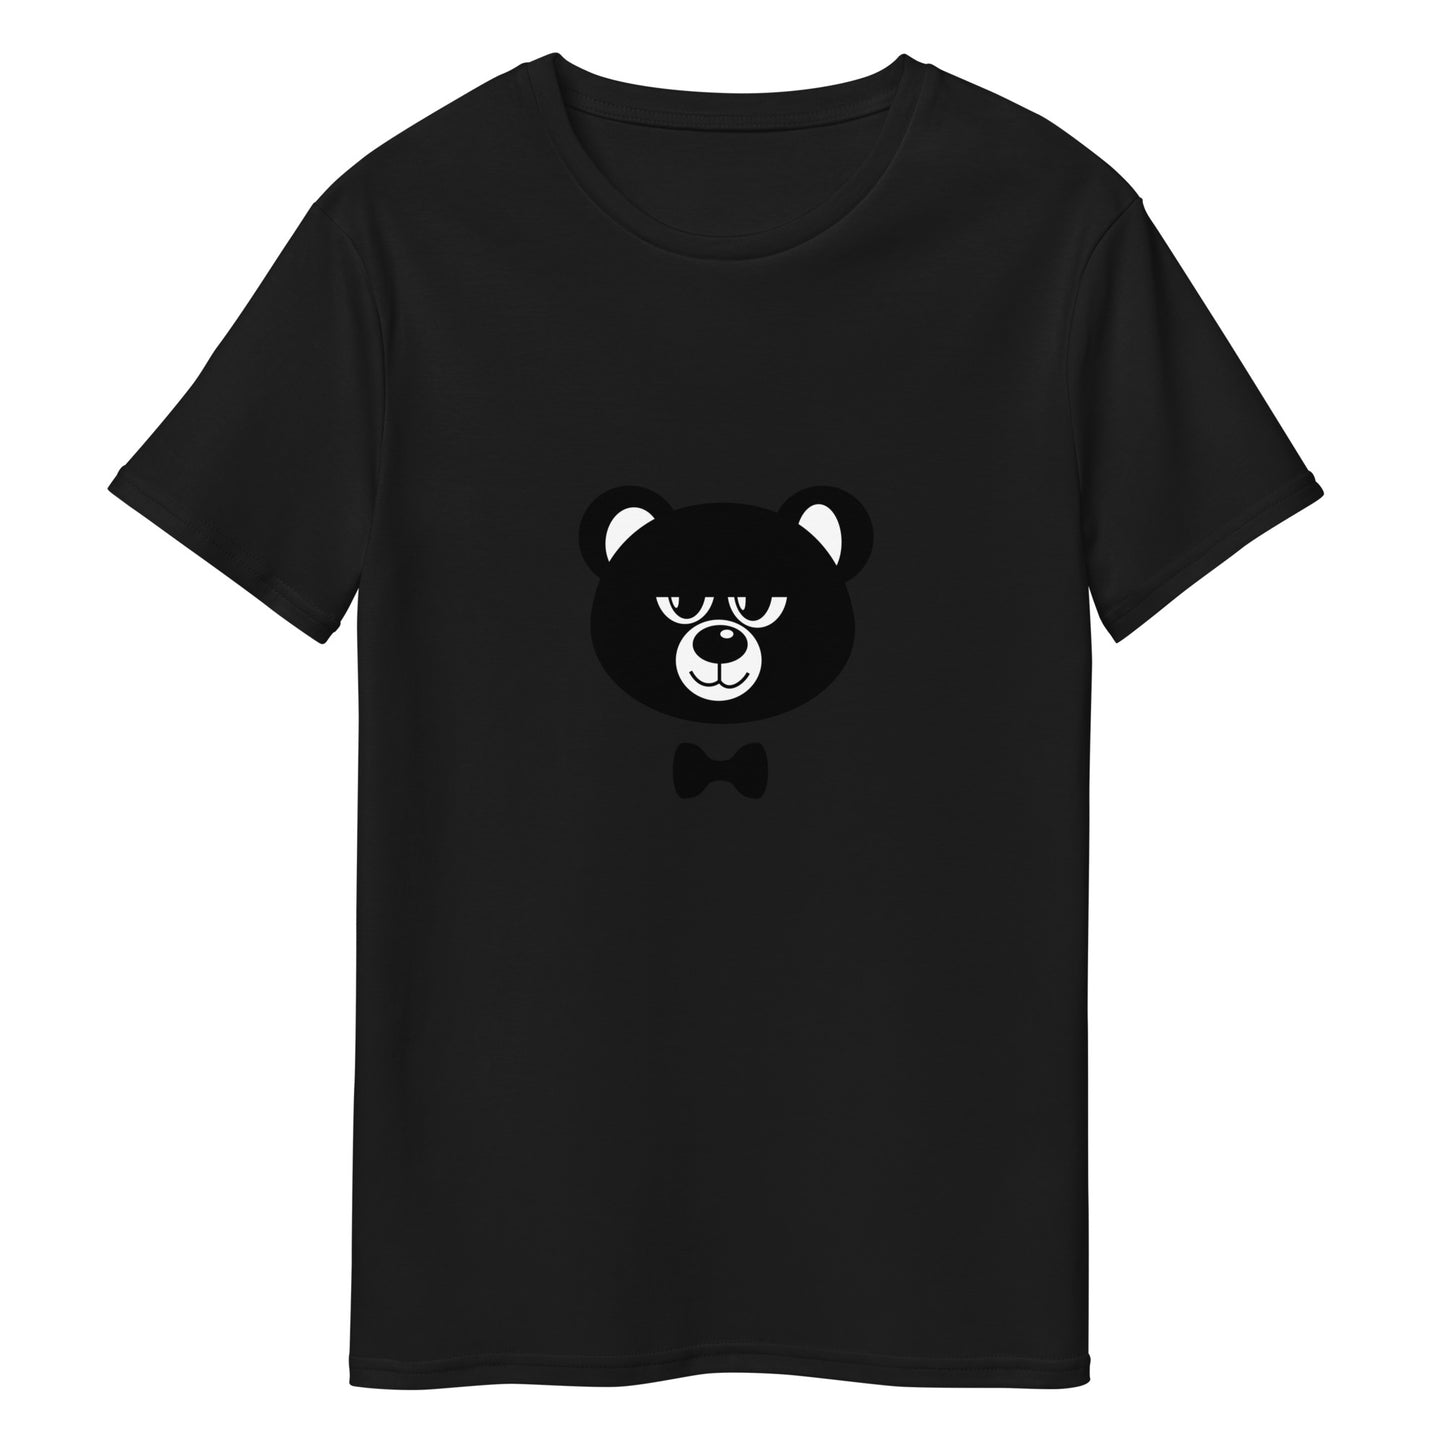 Men's T-shirt made of premium cotton "HBF" (eyes half open)